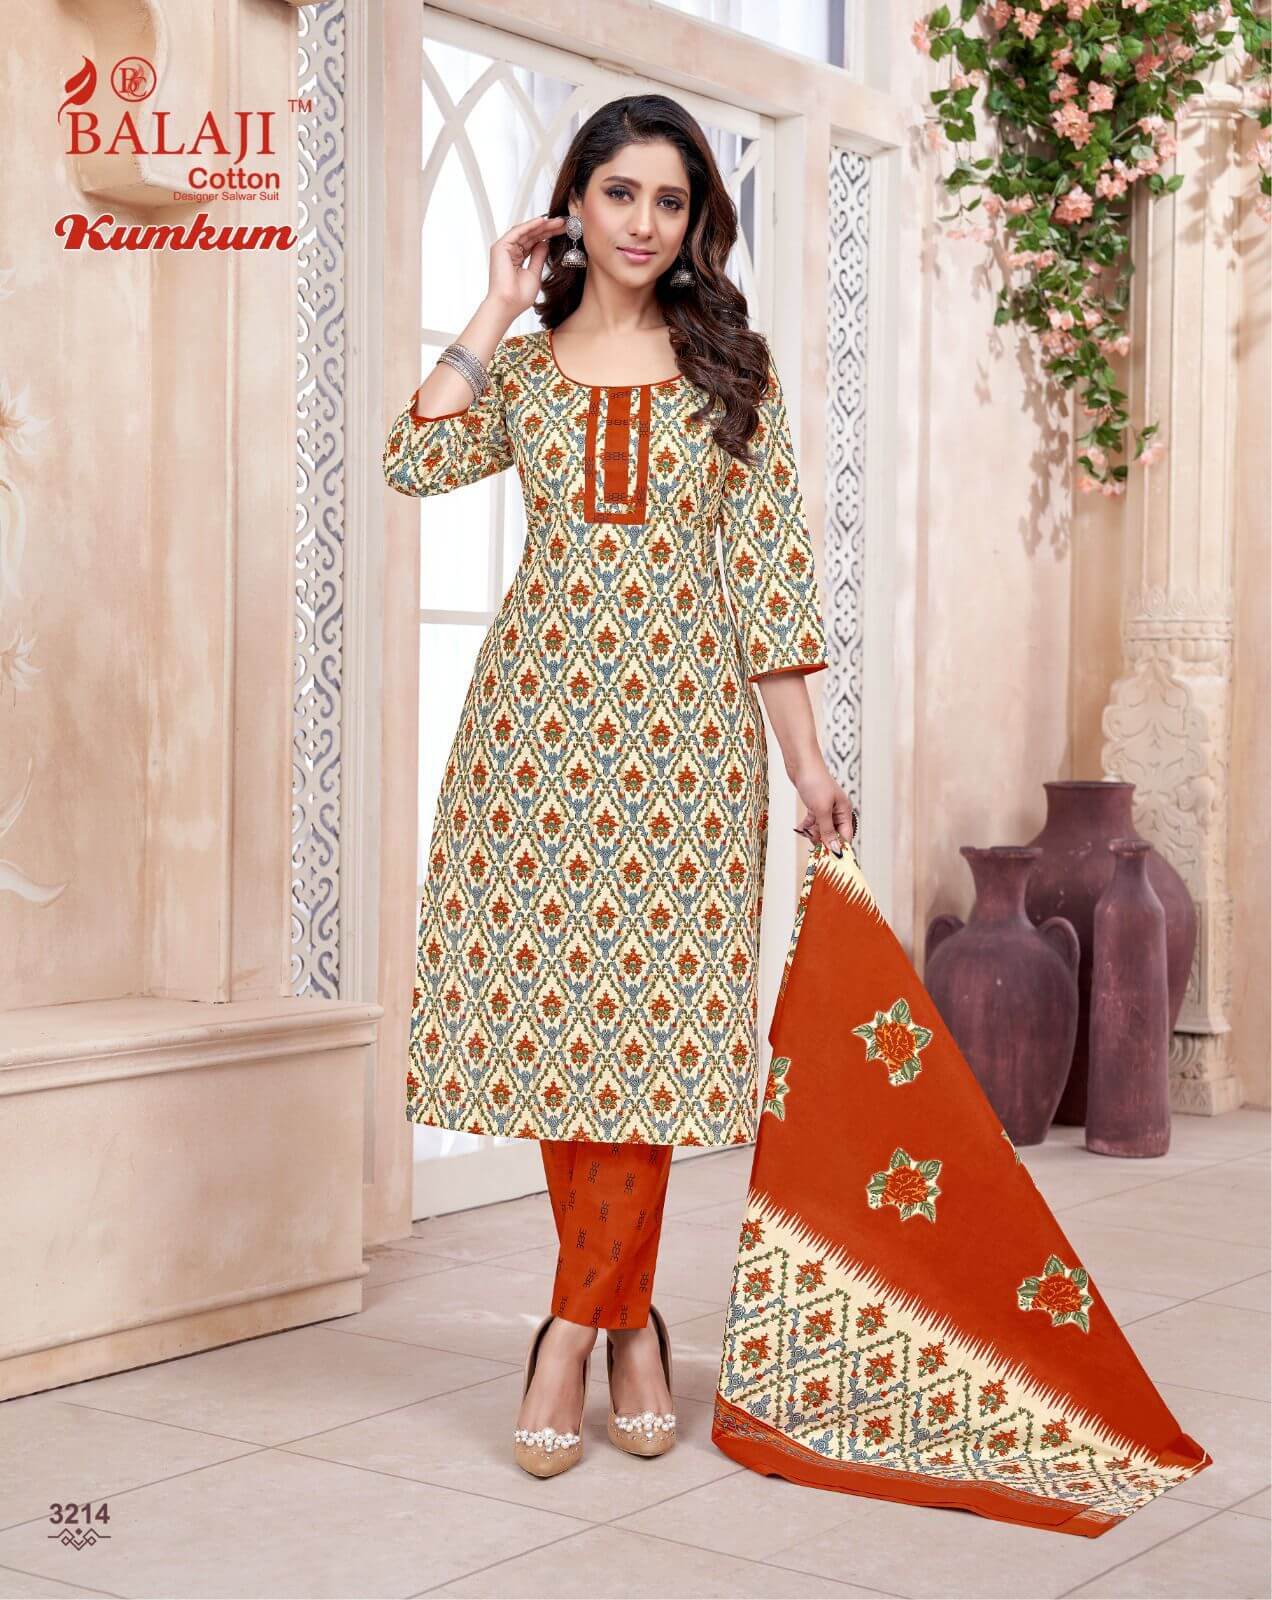 Balaji Cotton Kumkum Vol 32 Readymade Dress Catalog collection 10